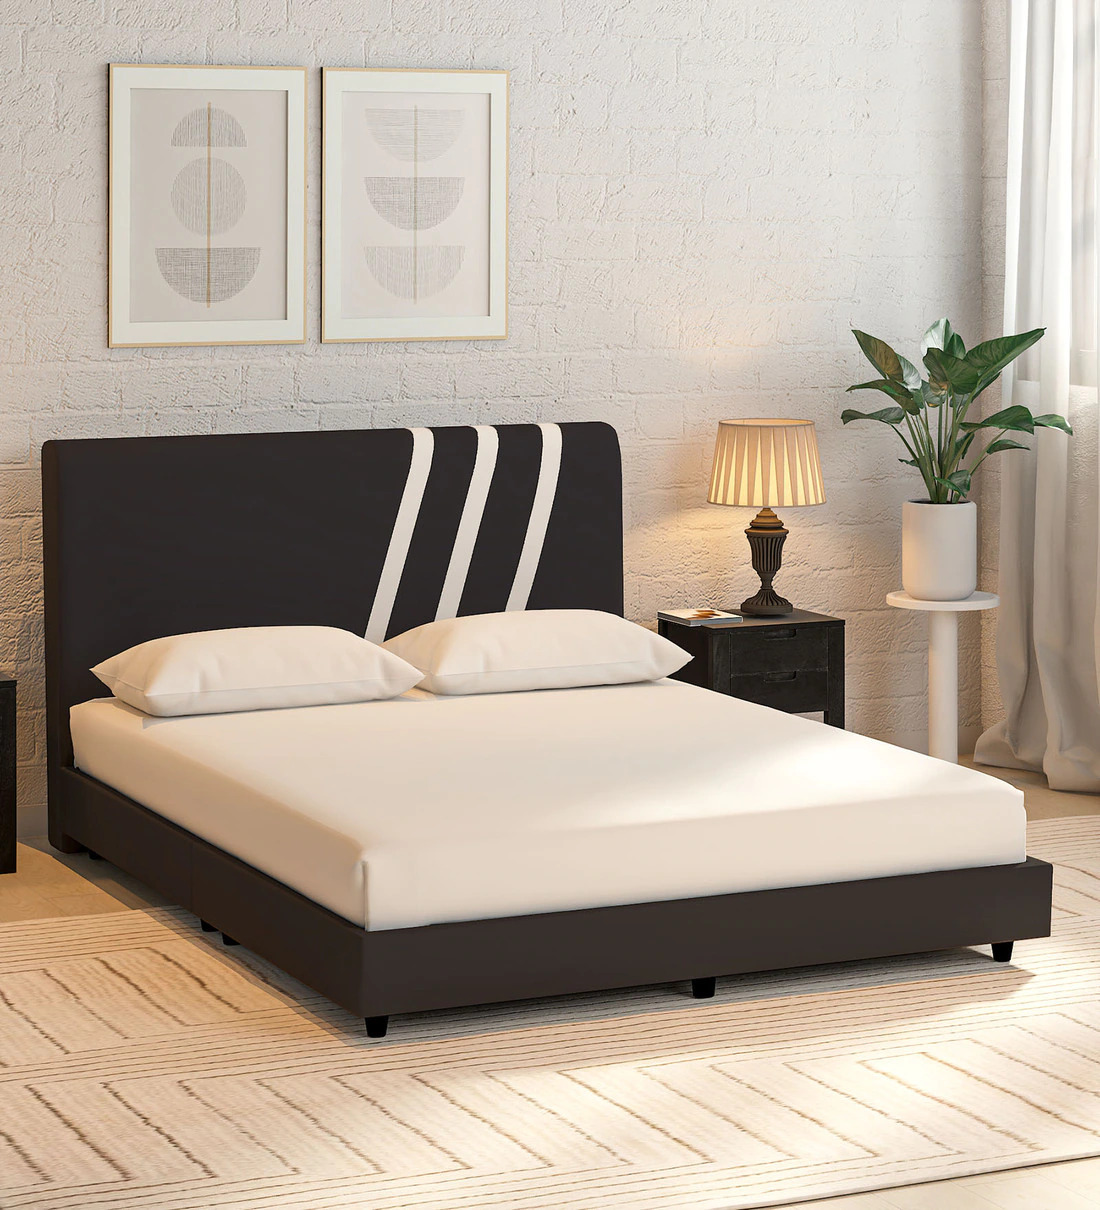 Nikko Upholstered Queen Size Bed in Dark Brown Finish